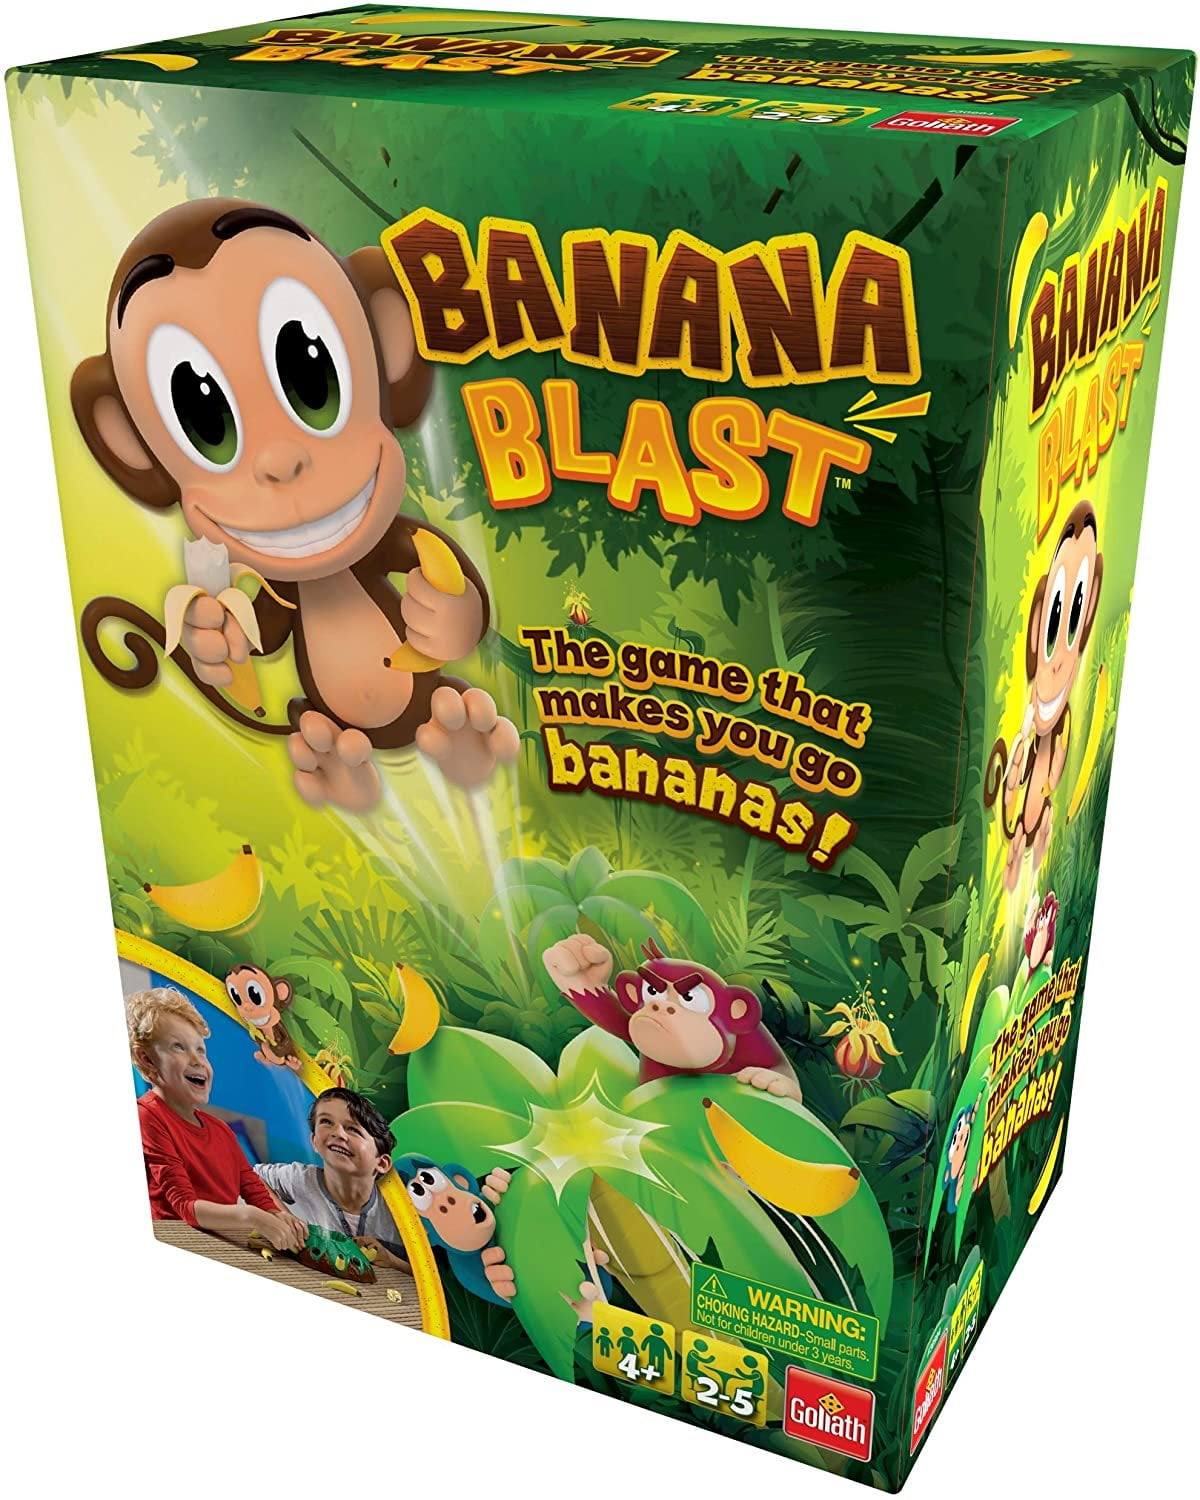 Bottoms Up: Banana Skin Game – Unzip Game 4